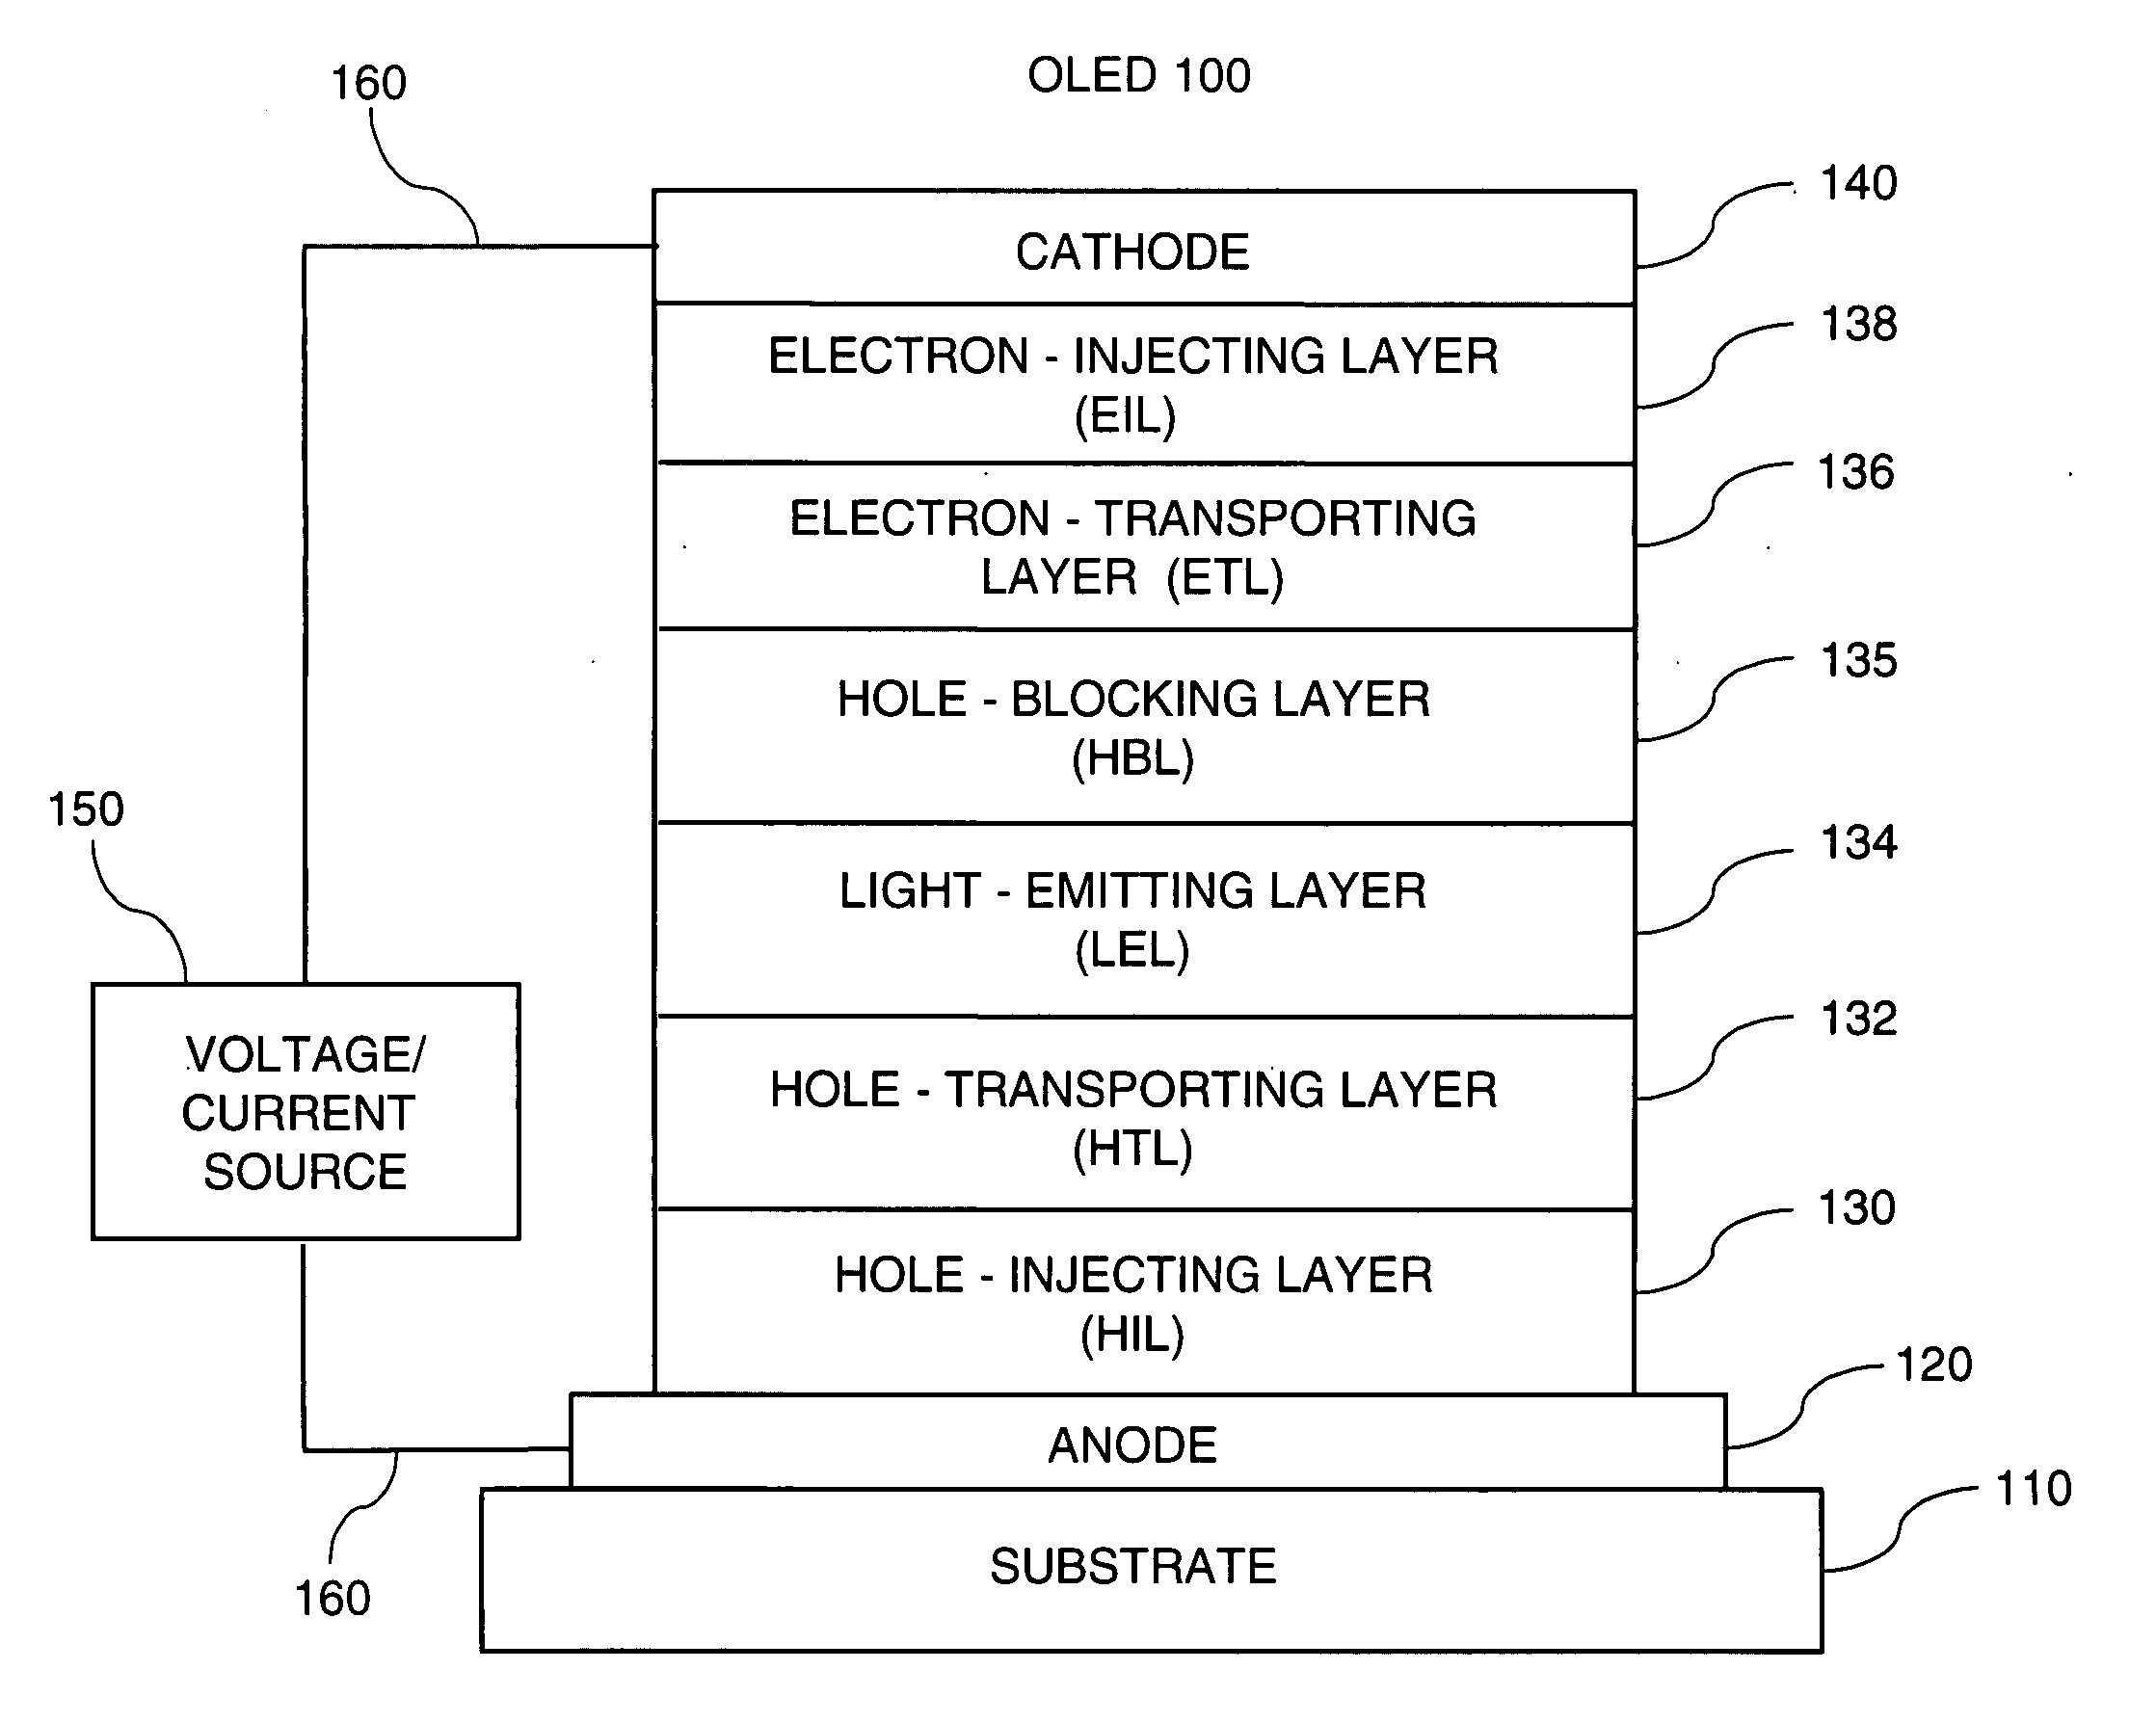 OLED device with certain fluoranthene host